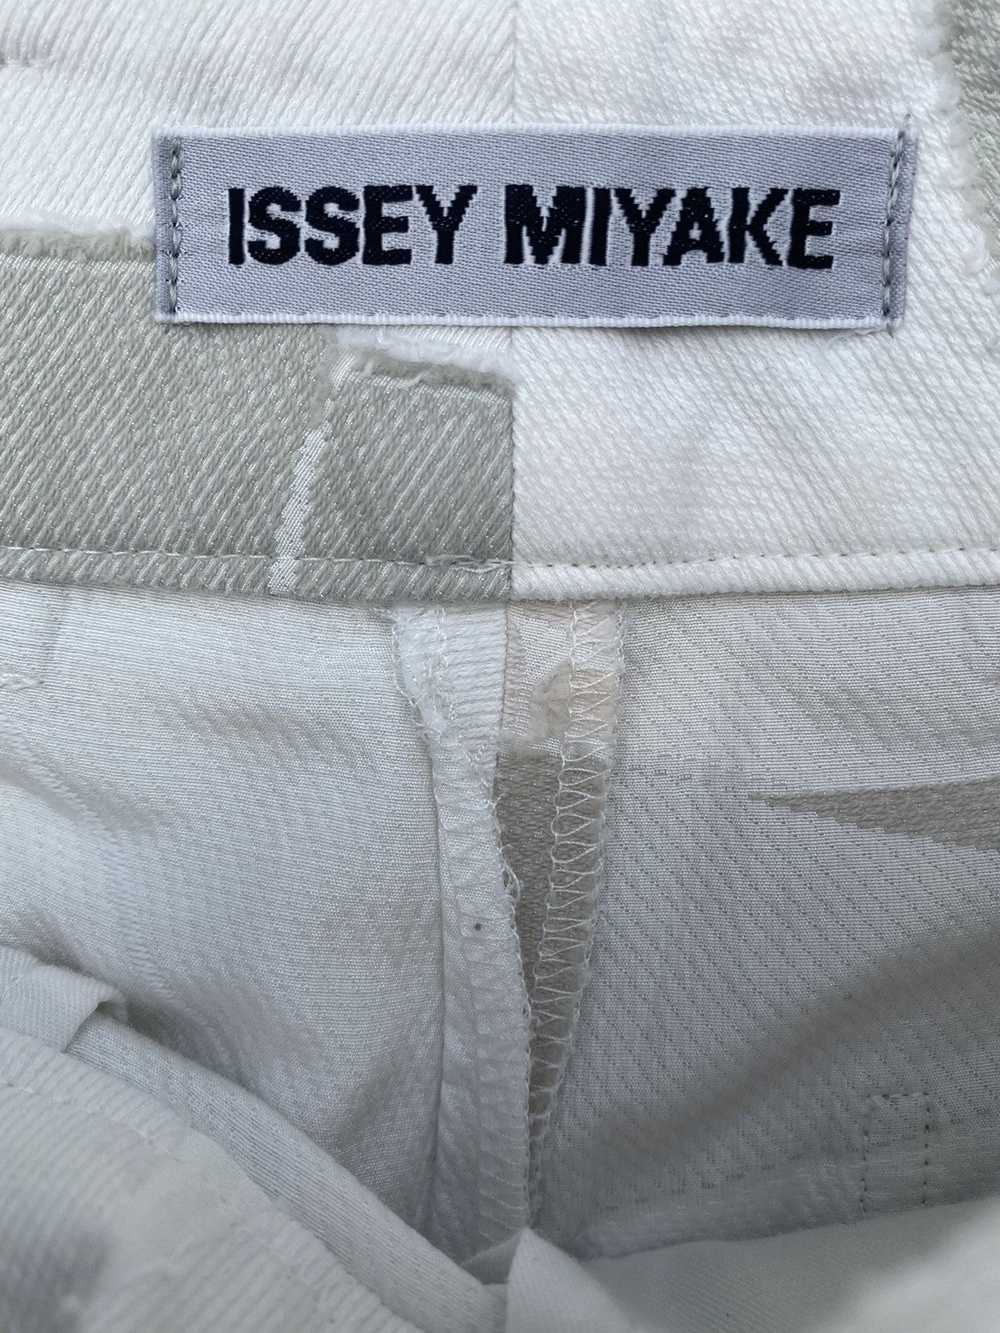 Issey Miyake Issey Miyake Pants - image 3